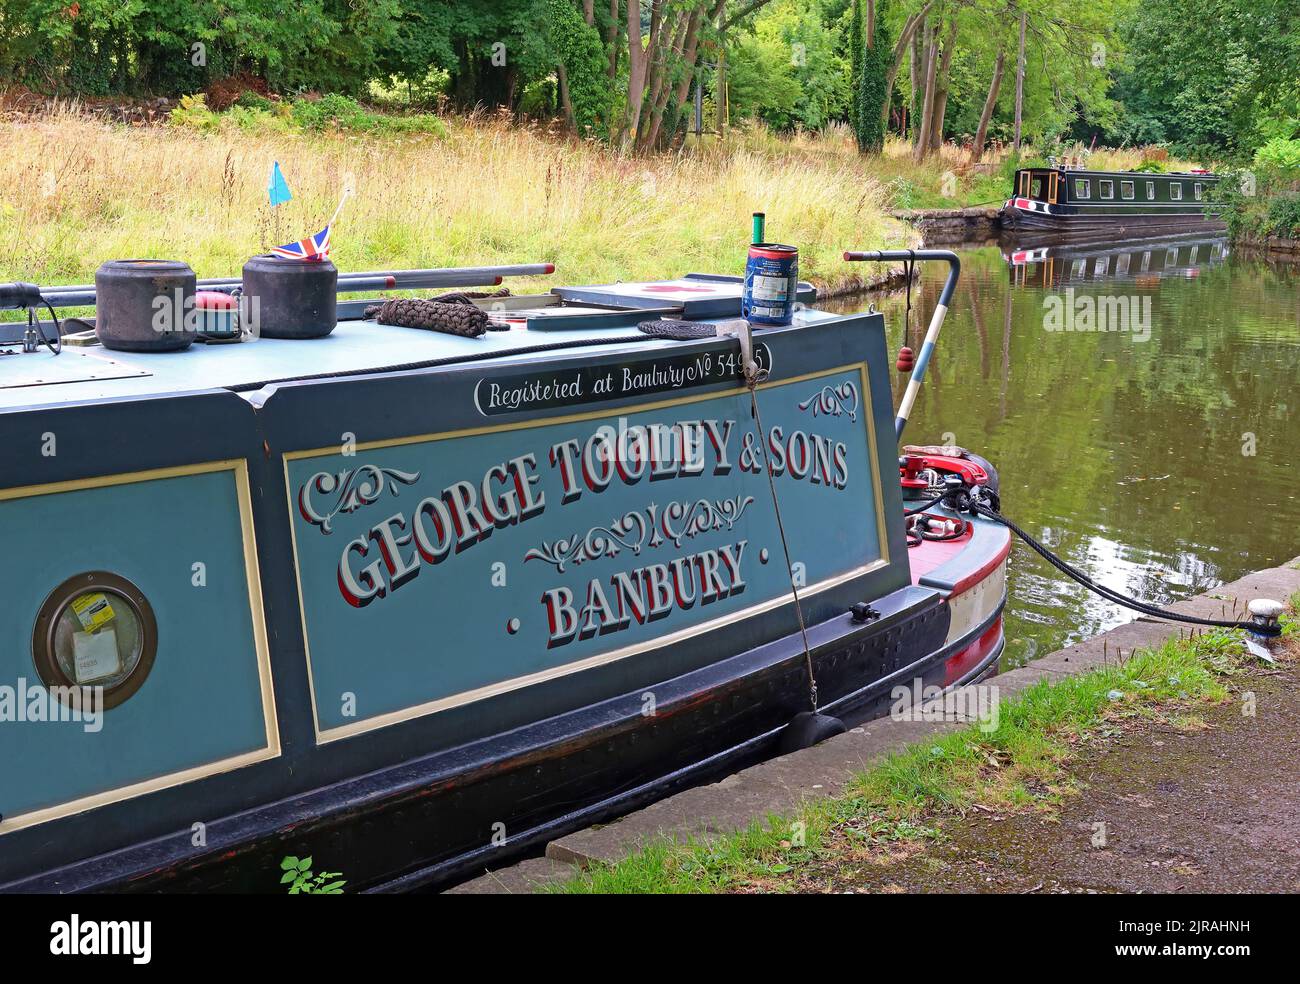 George Tooley & sons, Banbury barge moored at Vale of Llangollen, Trevor, Llangollen, Wales, UK,  LL20 7TP Stock Photo